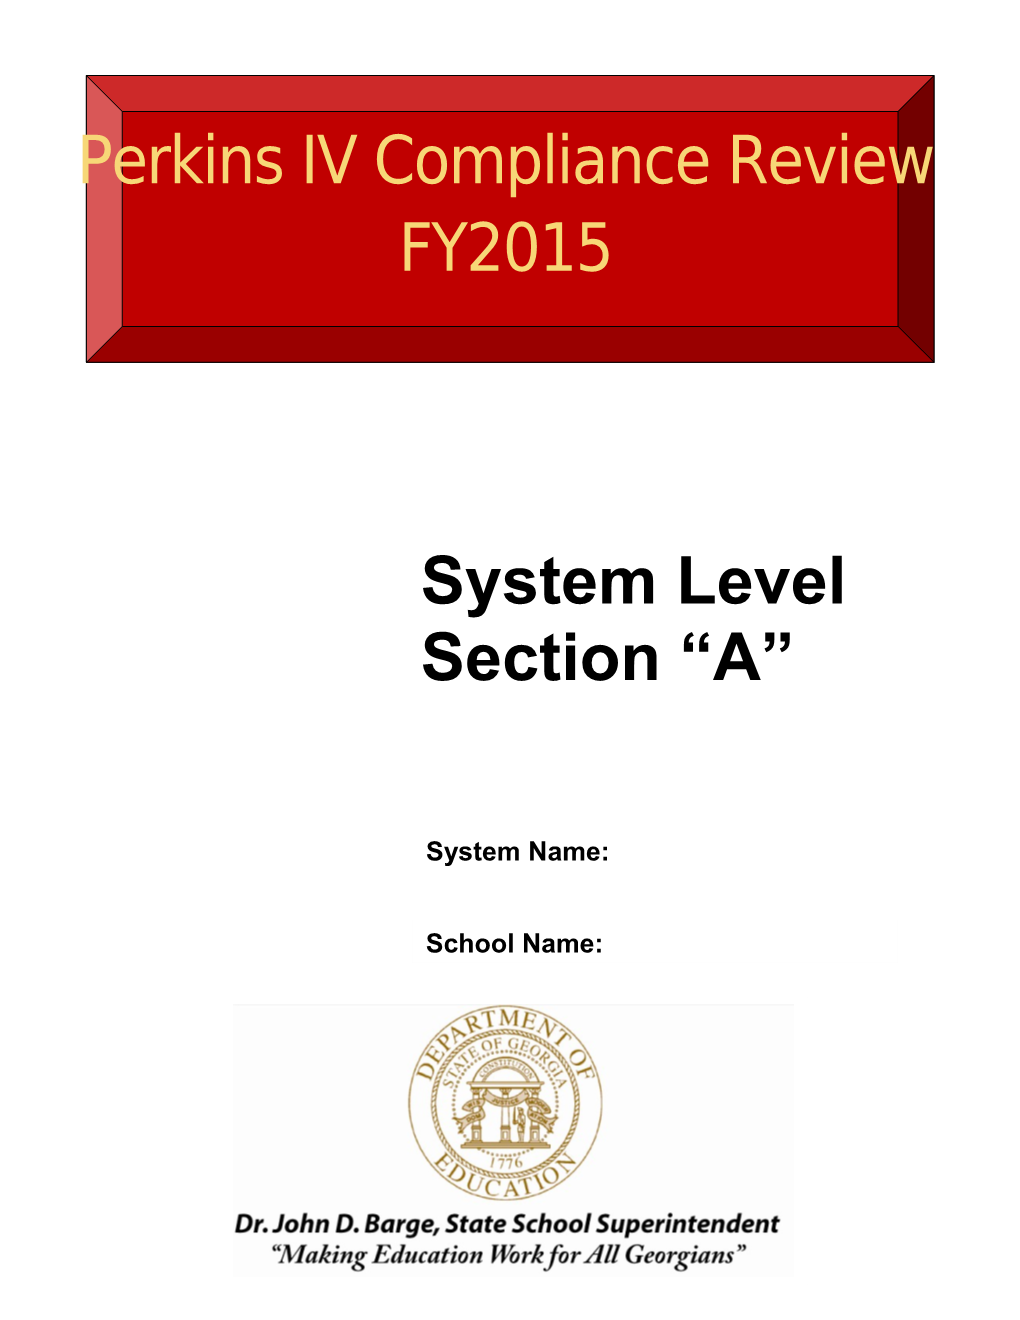 Perkins Compliance Review Process